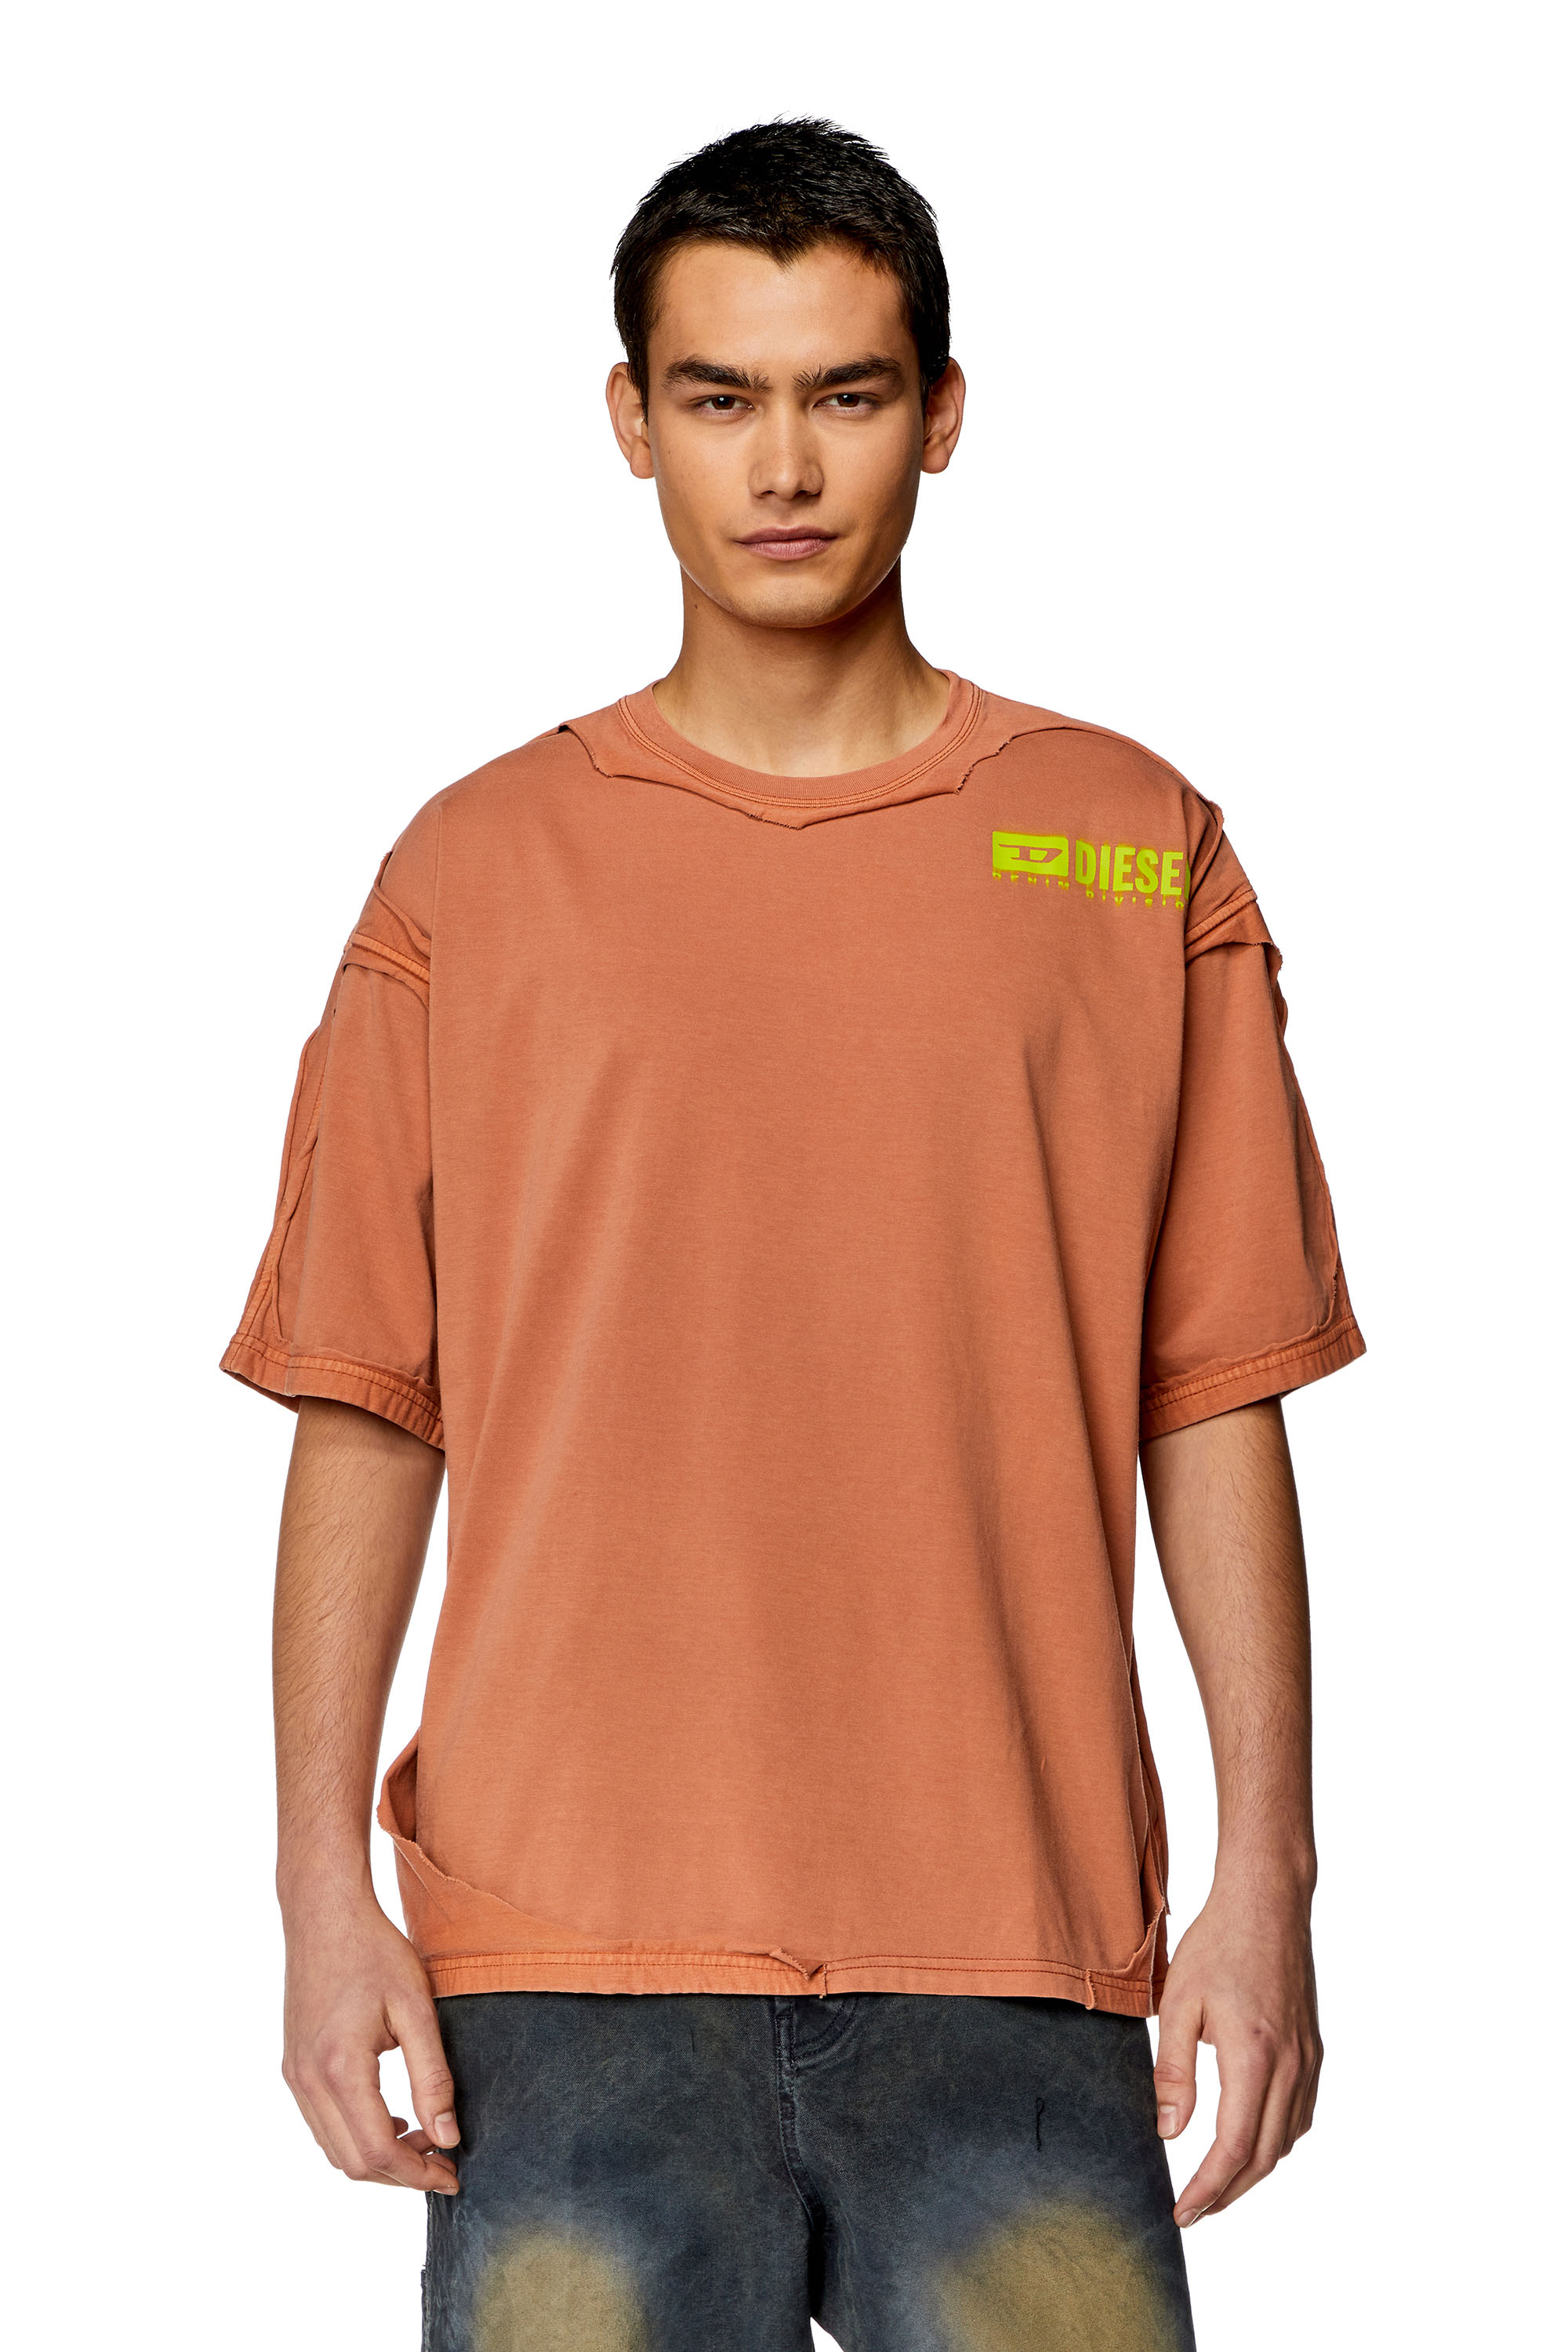 Diesel T-shirt With Destroyed Peel-off Effect In Orange